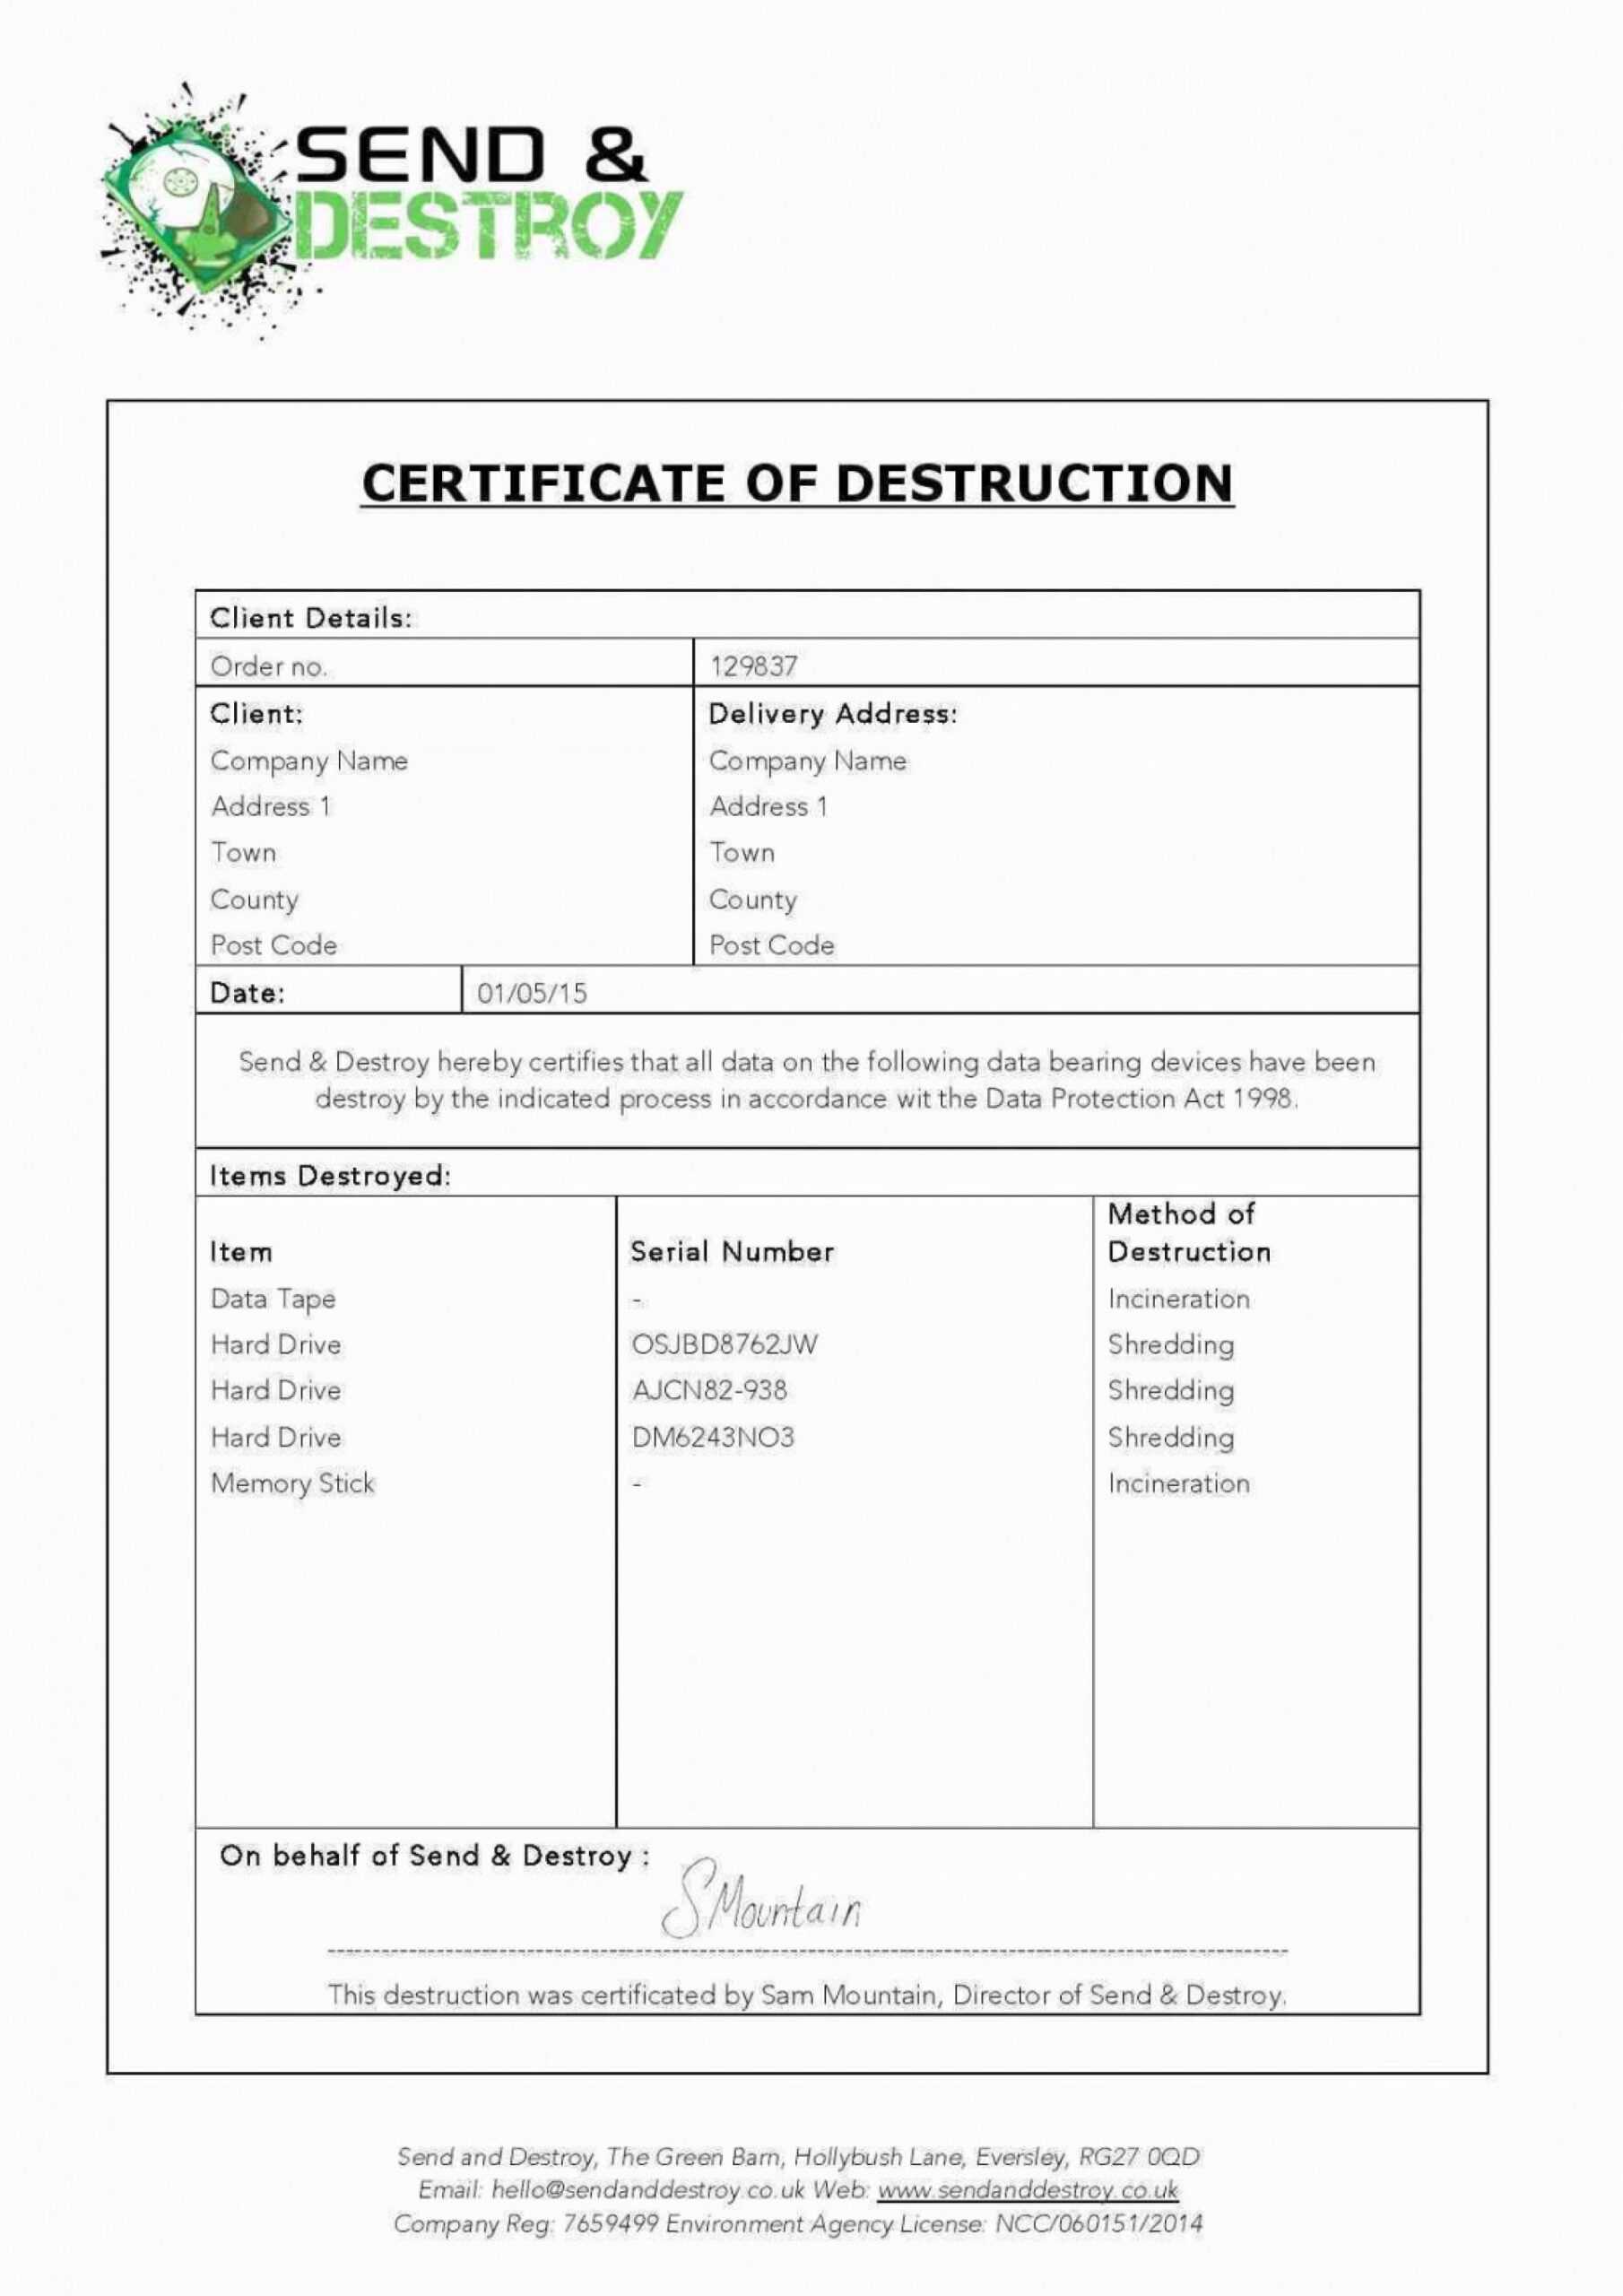 026 Certificate Of Destruction Template Word Ideal Sample With Regard To Hard Drive Destruction Certificate Template